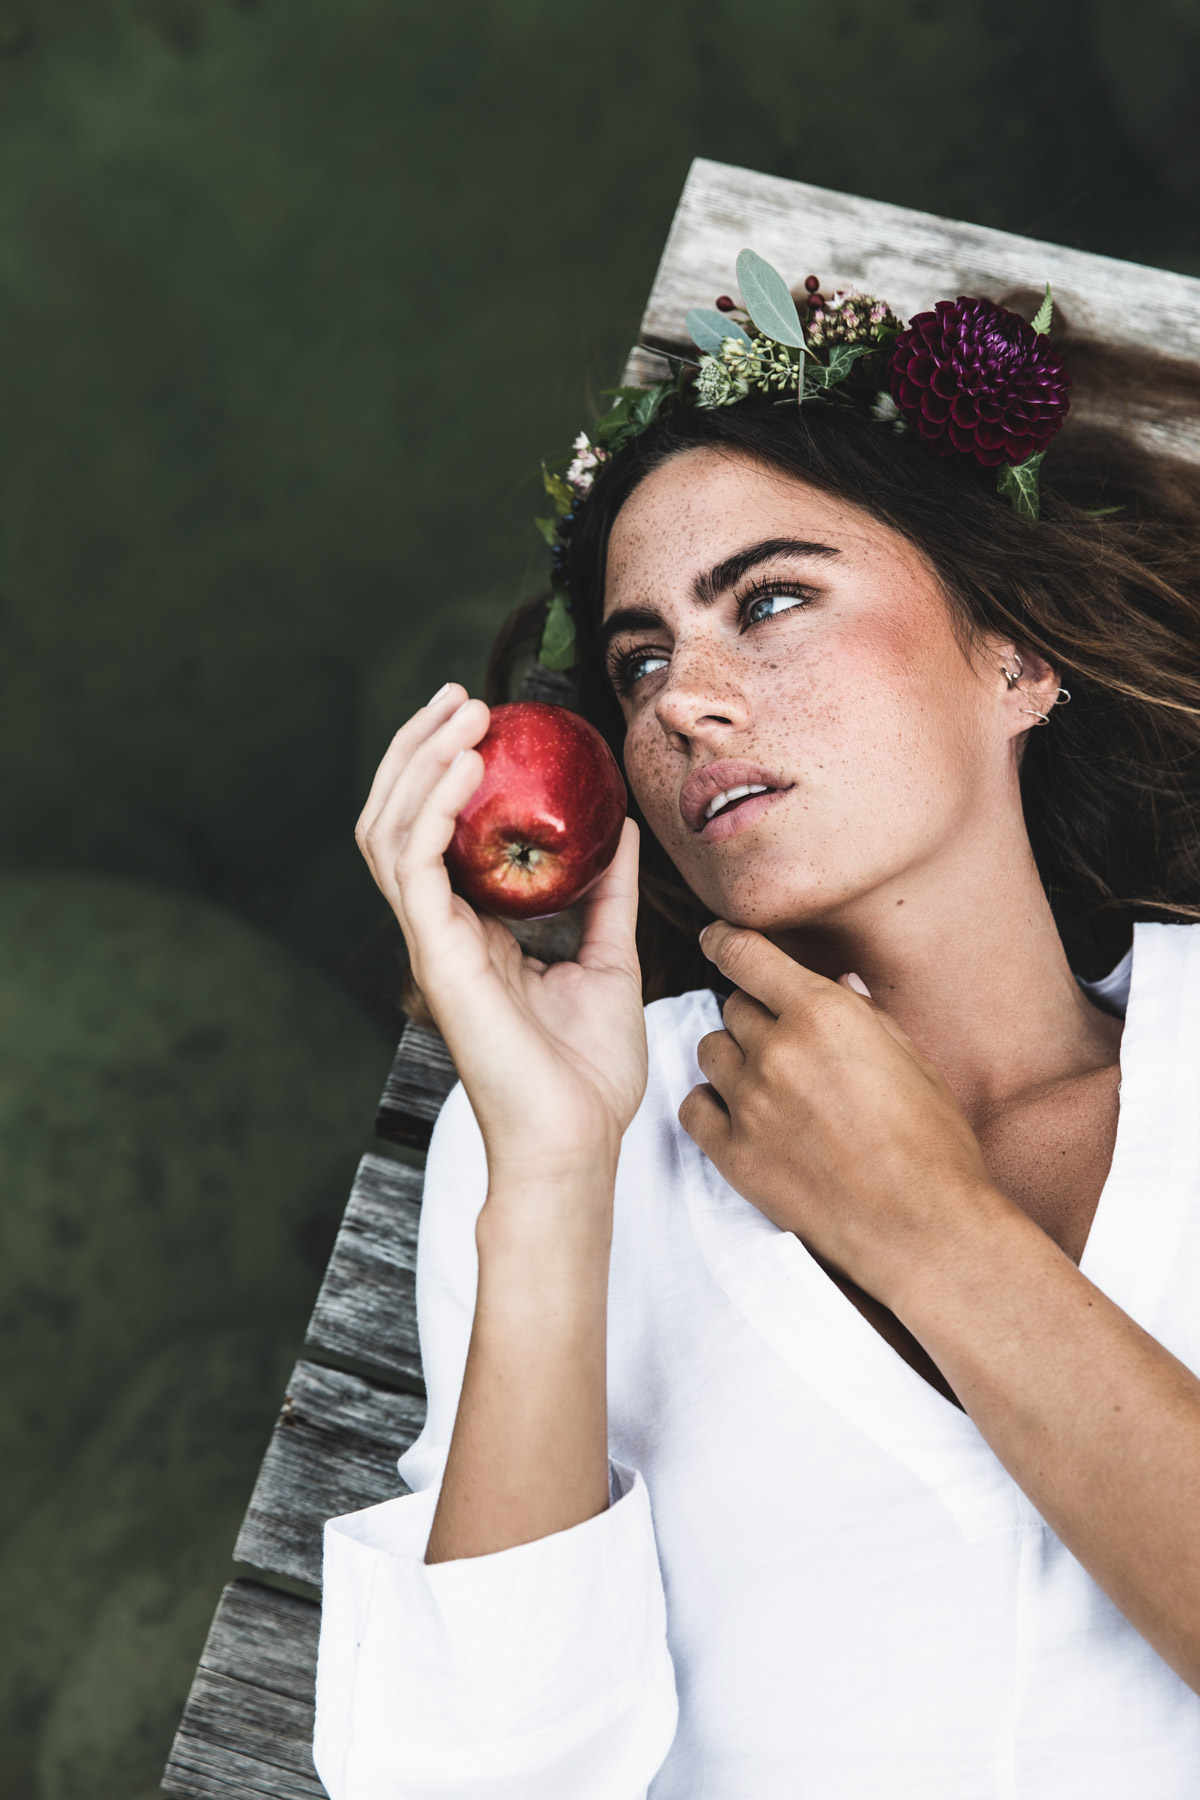 Adam und Eva – Beauty / Commercial – Christel Thoresen – Hair and Make-Up Artist